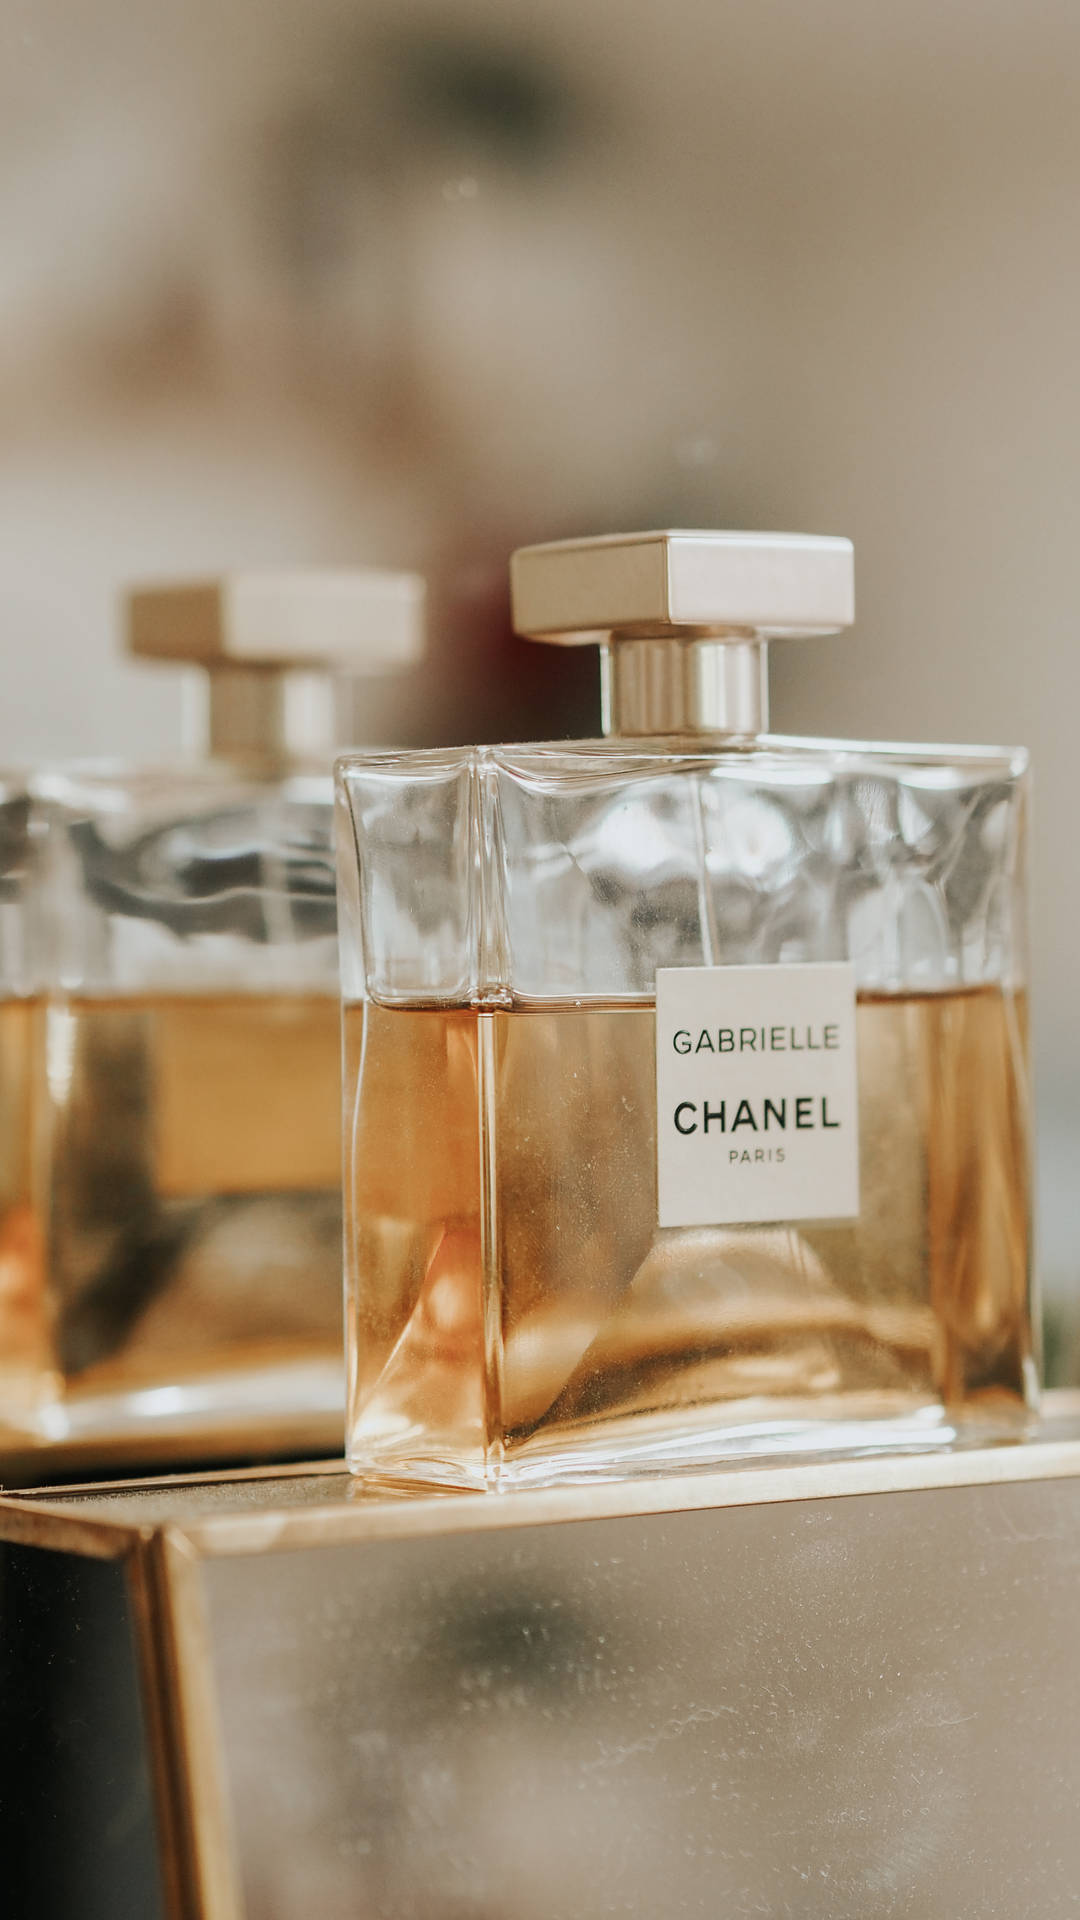 Gabrielle Chanel Perfume Mirror Reflection